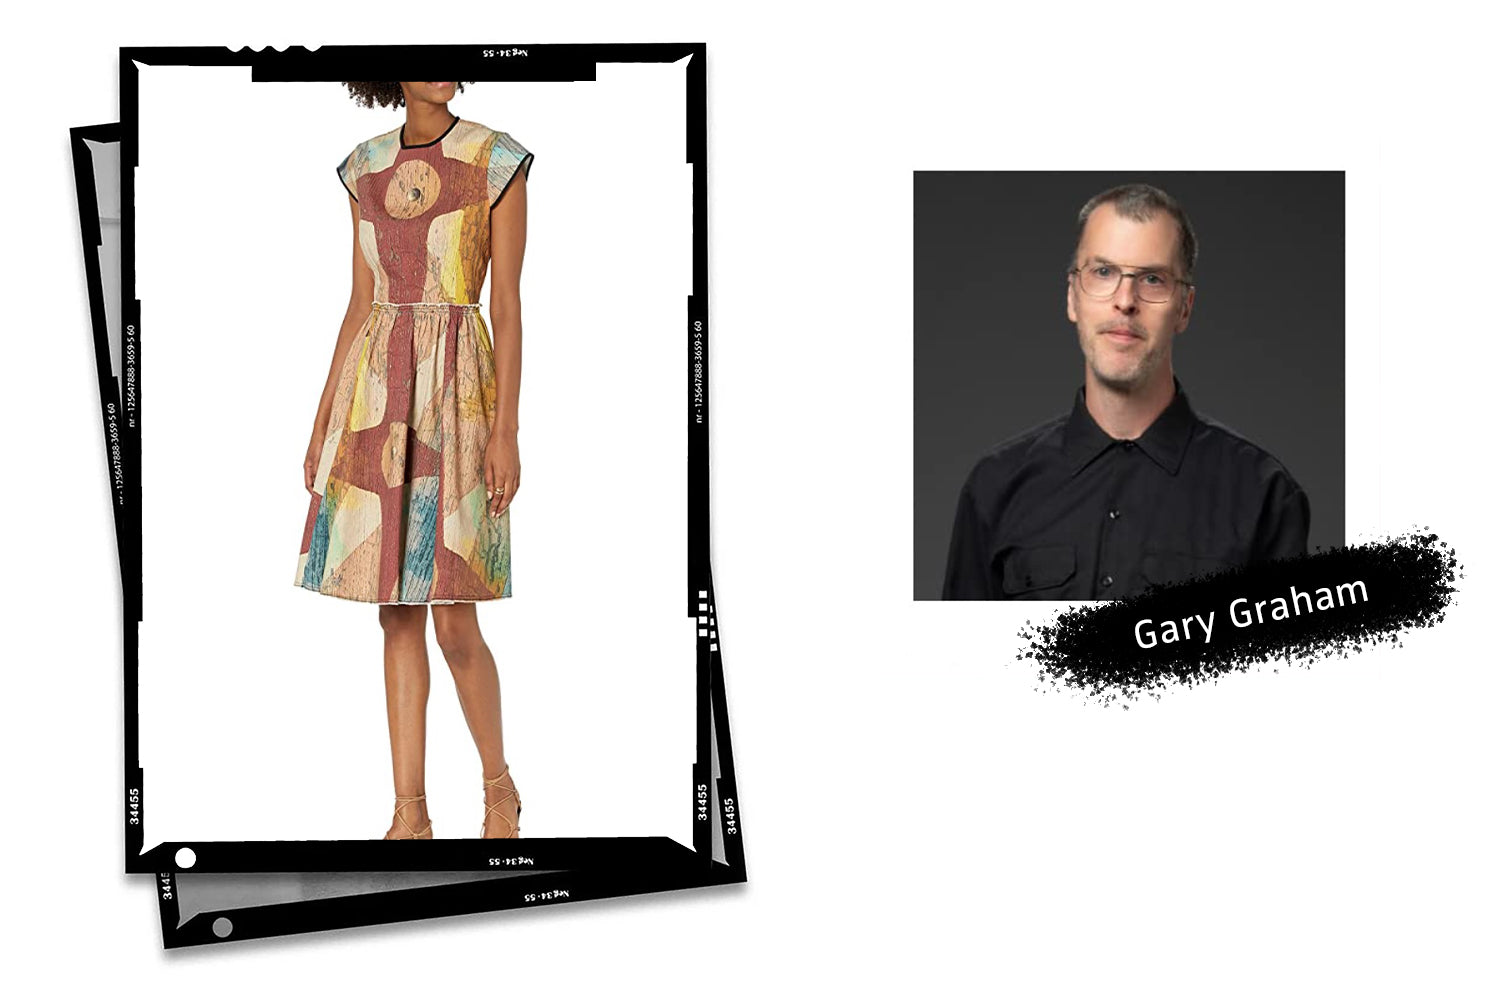 Gary Graham - Making The Cut Gewinner Outfit - Staffel 2 Folge 5